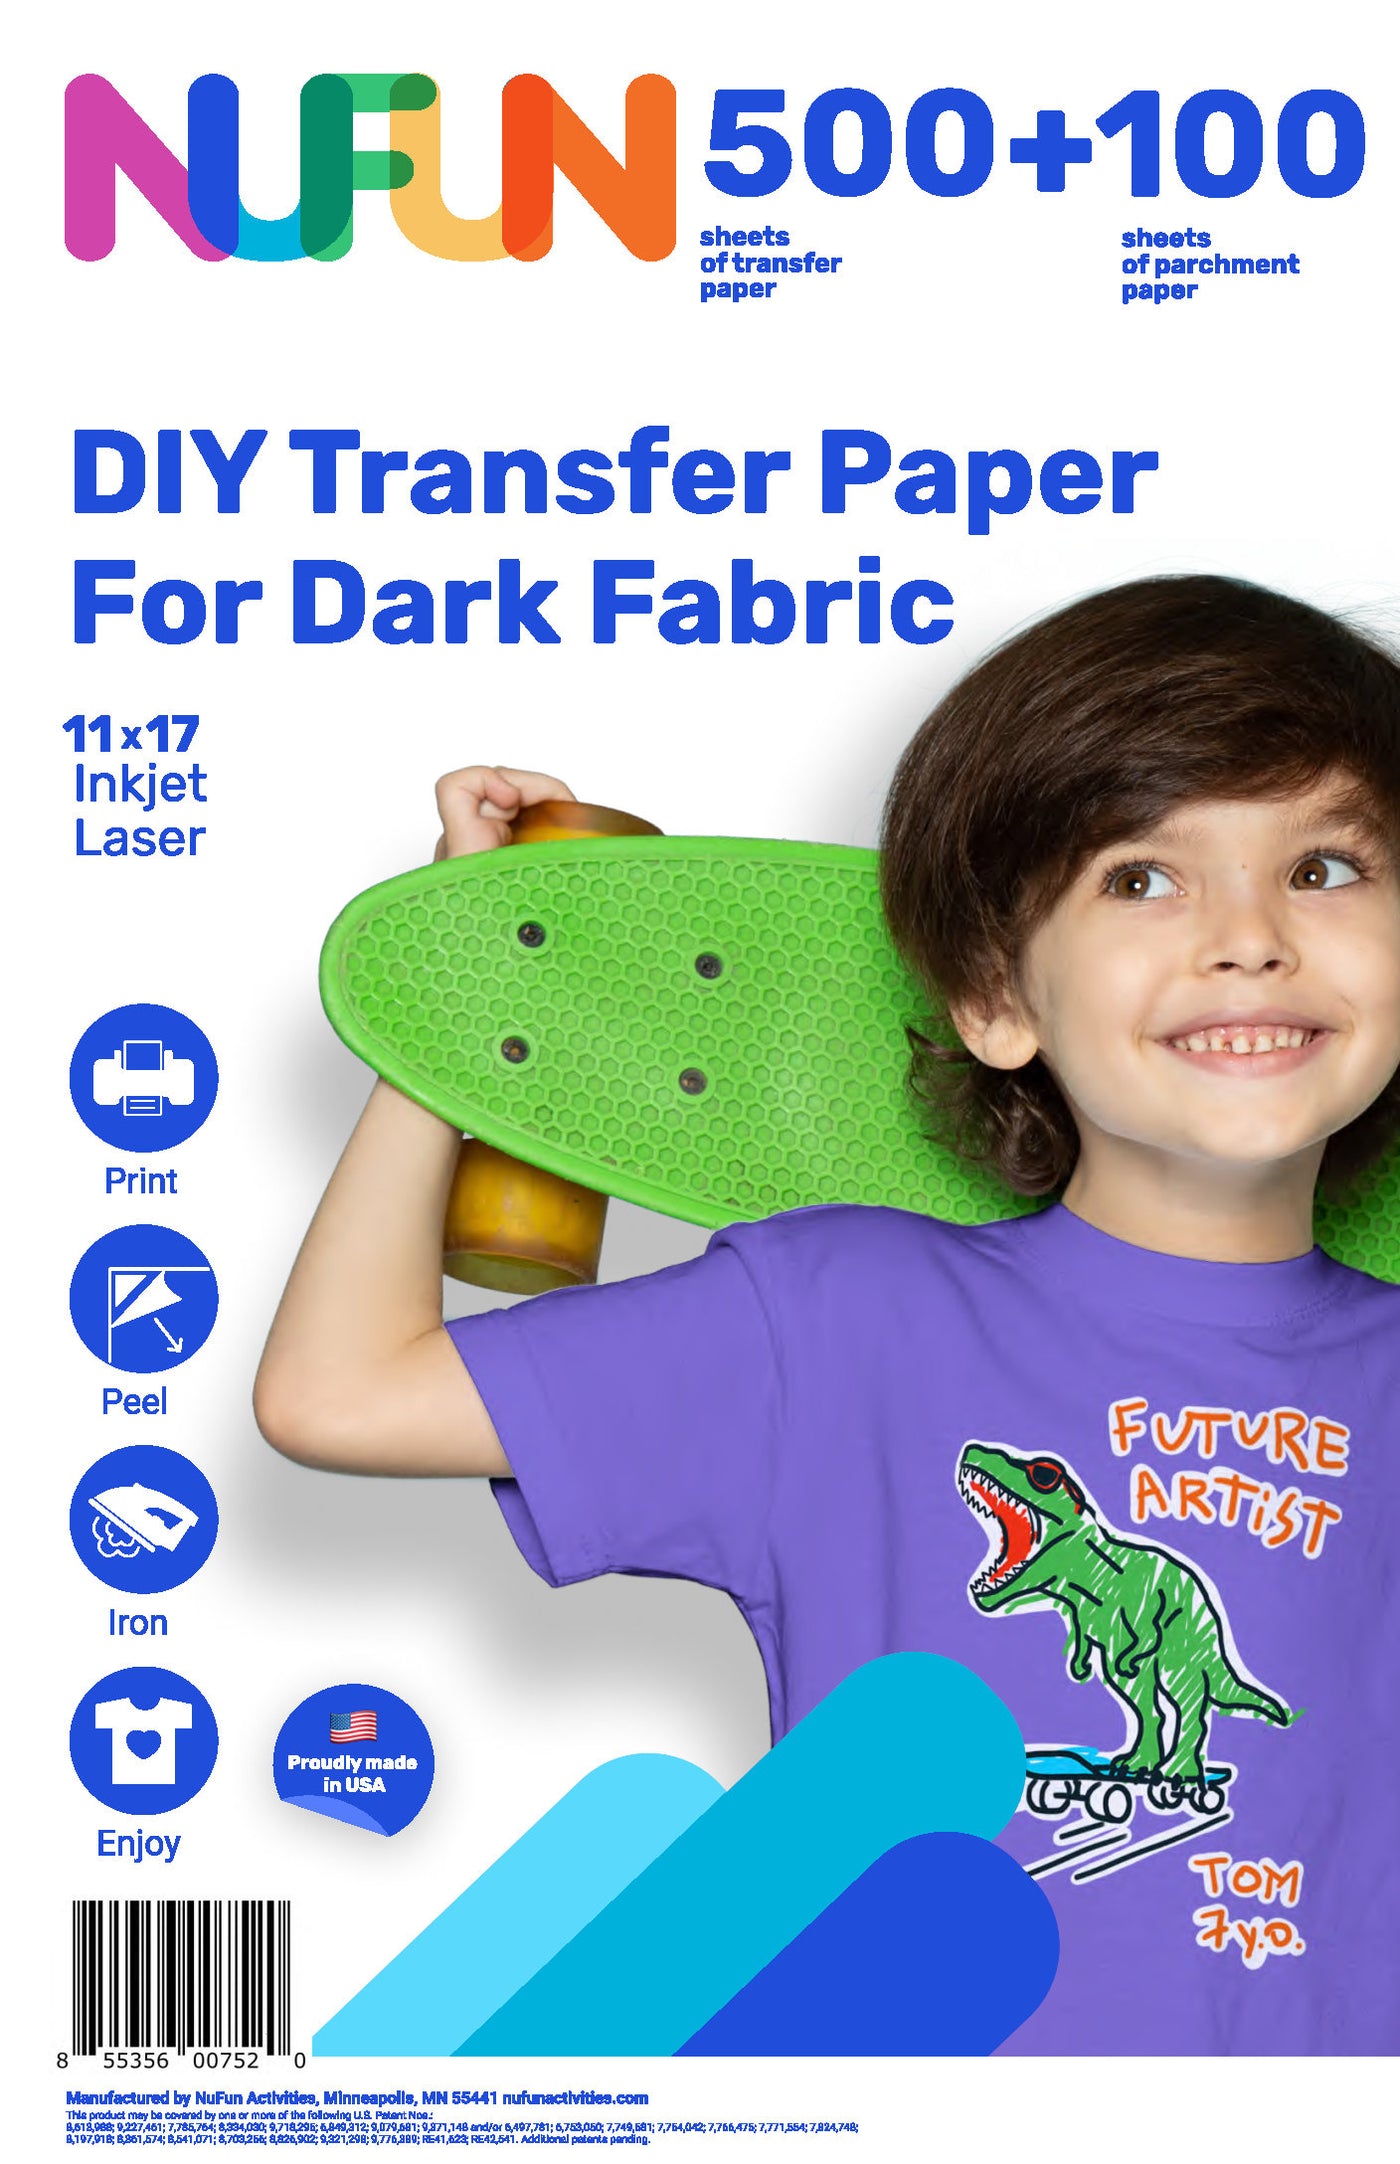 June Tailor 8.5 x 11 Dark T Shirt Iron On Transfer Sheets 3ct